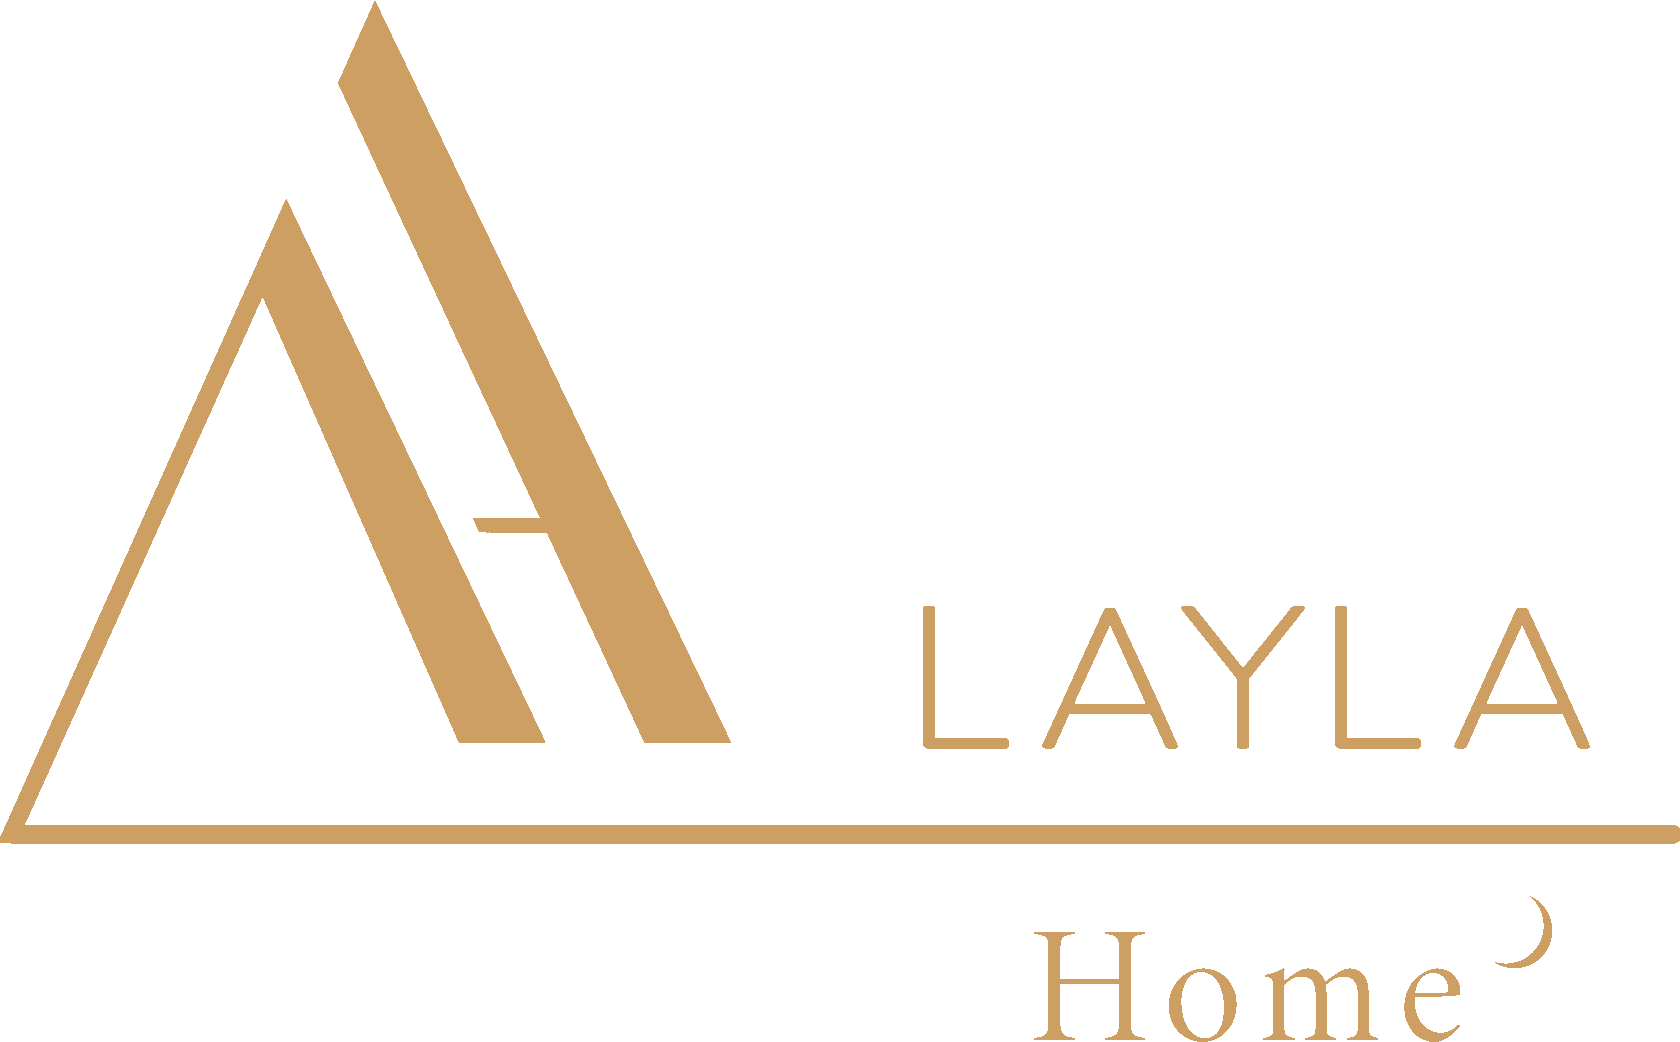 LAYLA Home